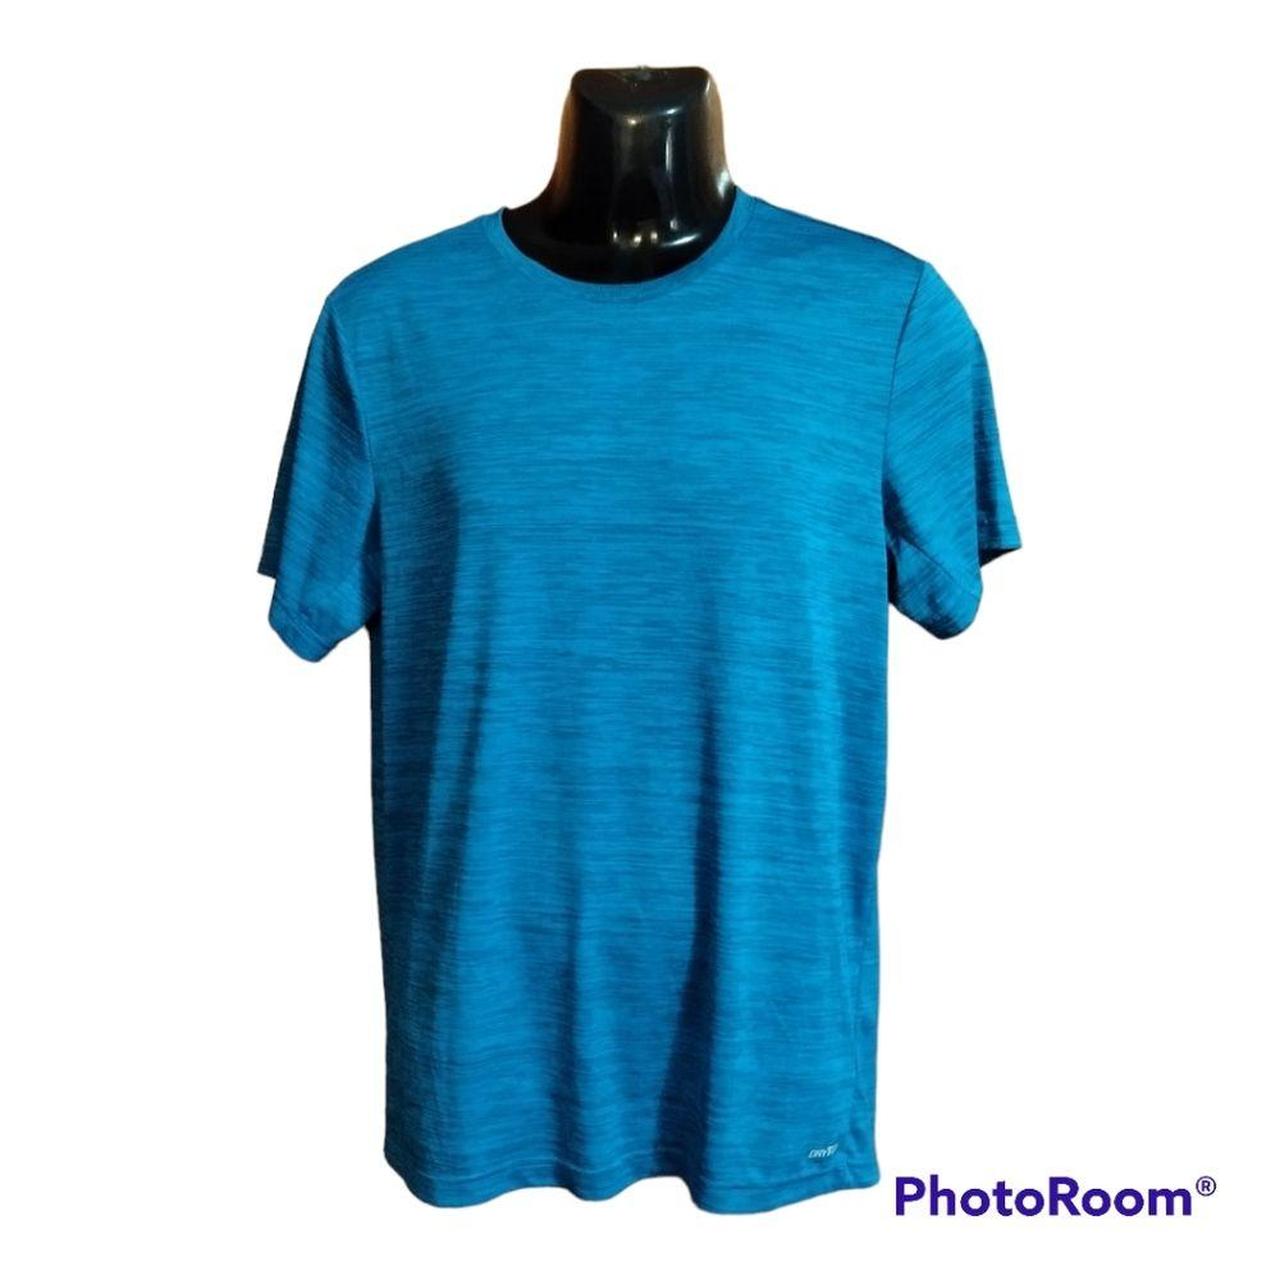 NEW Tek Gear DryTek Blue Shirt